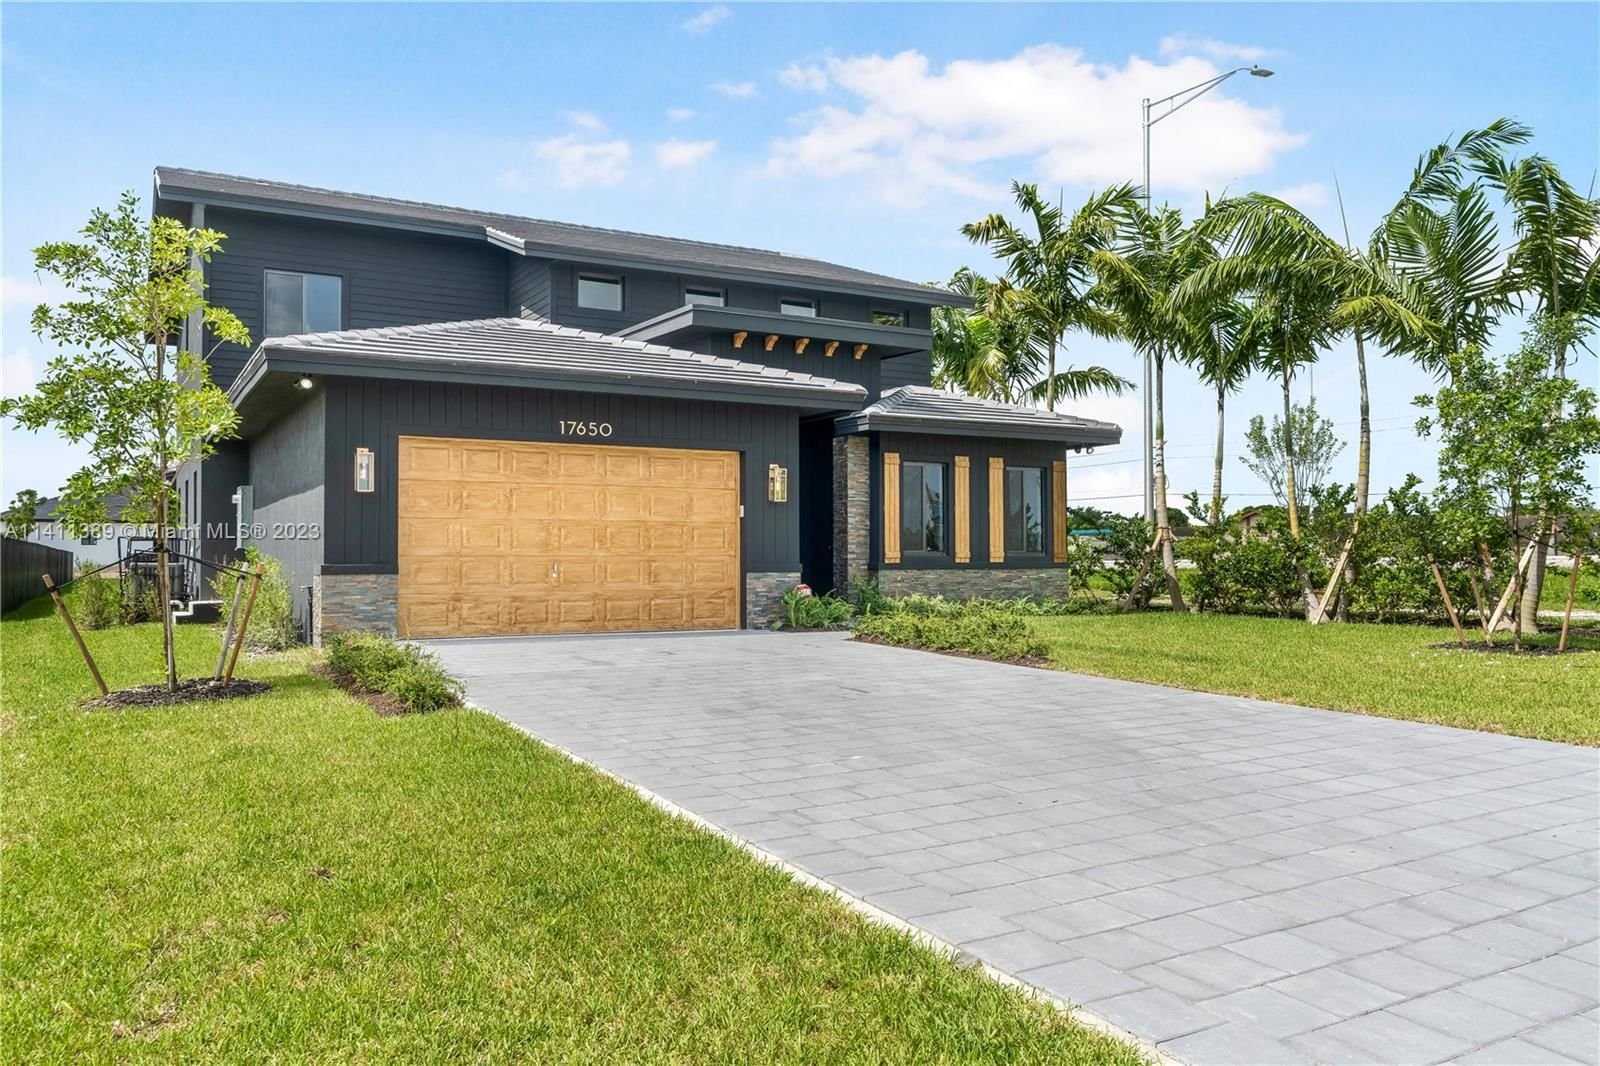 Real estate property located at 17650 280 St., Miami-Dade County, Miami, FL